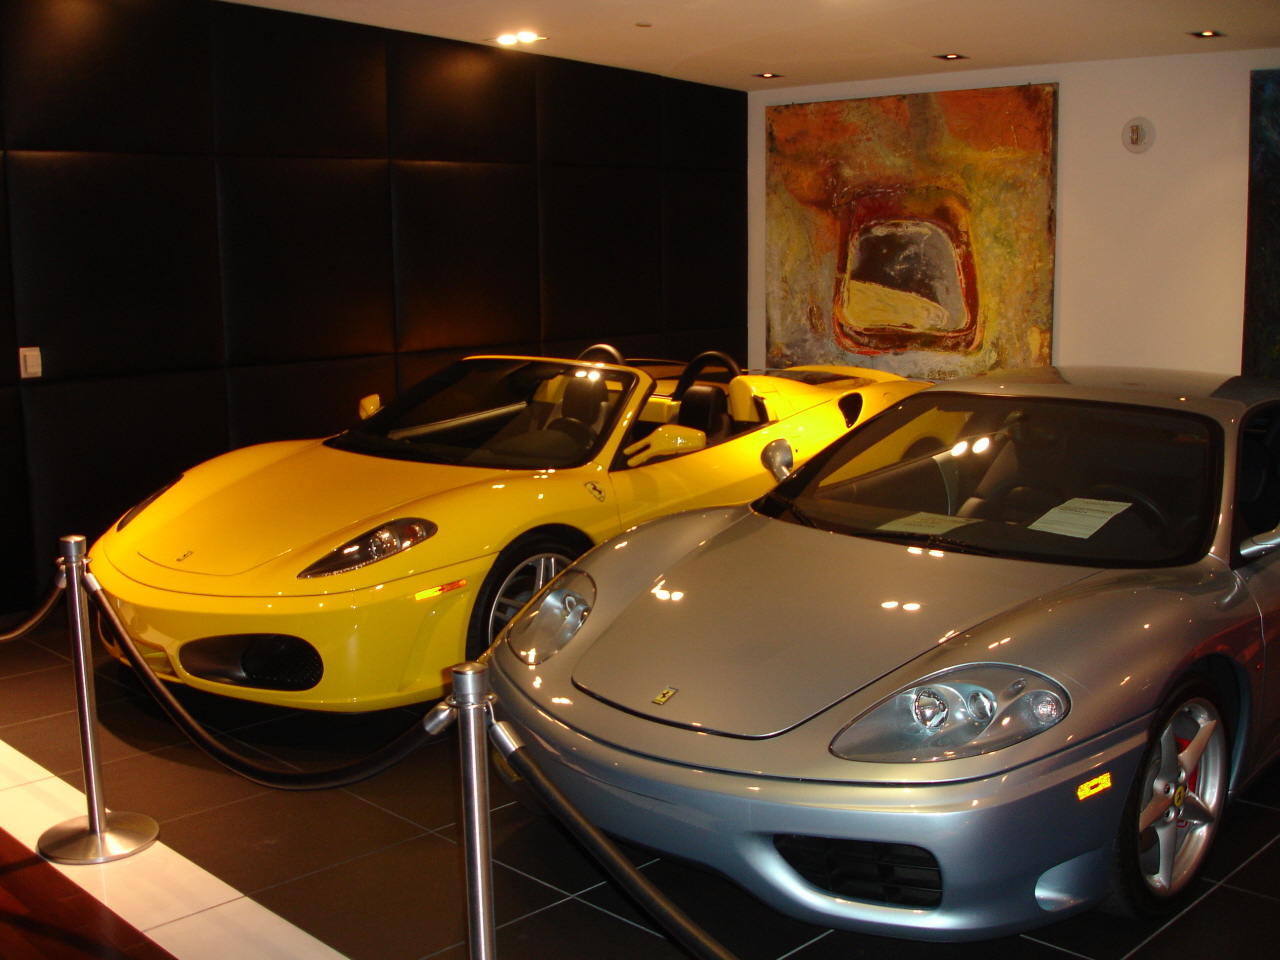 Visita al Museo Lamborghini Las Vegas/ Visit to Lamborghini Museum LasVegas-Lamborghini28.JPG